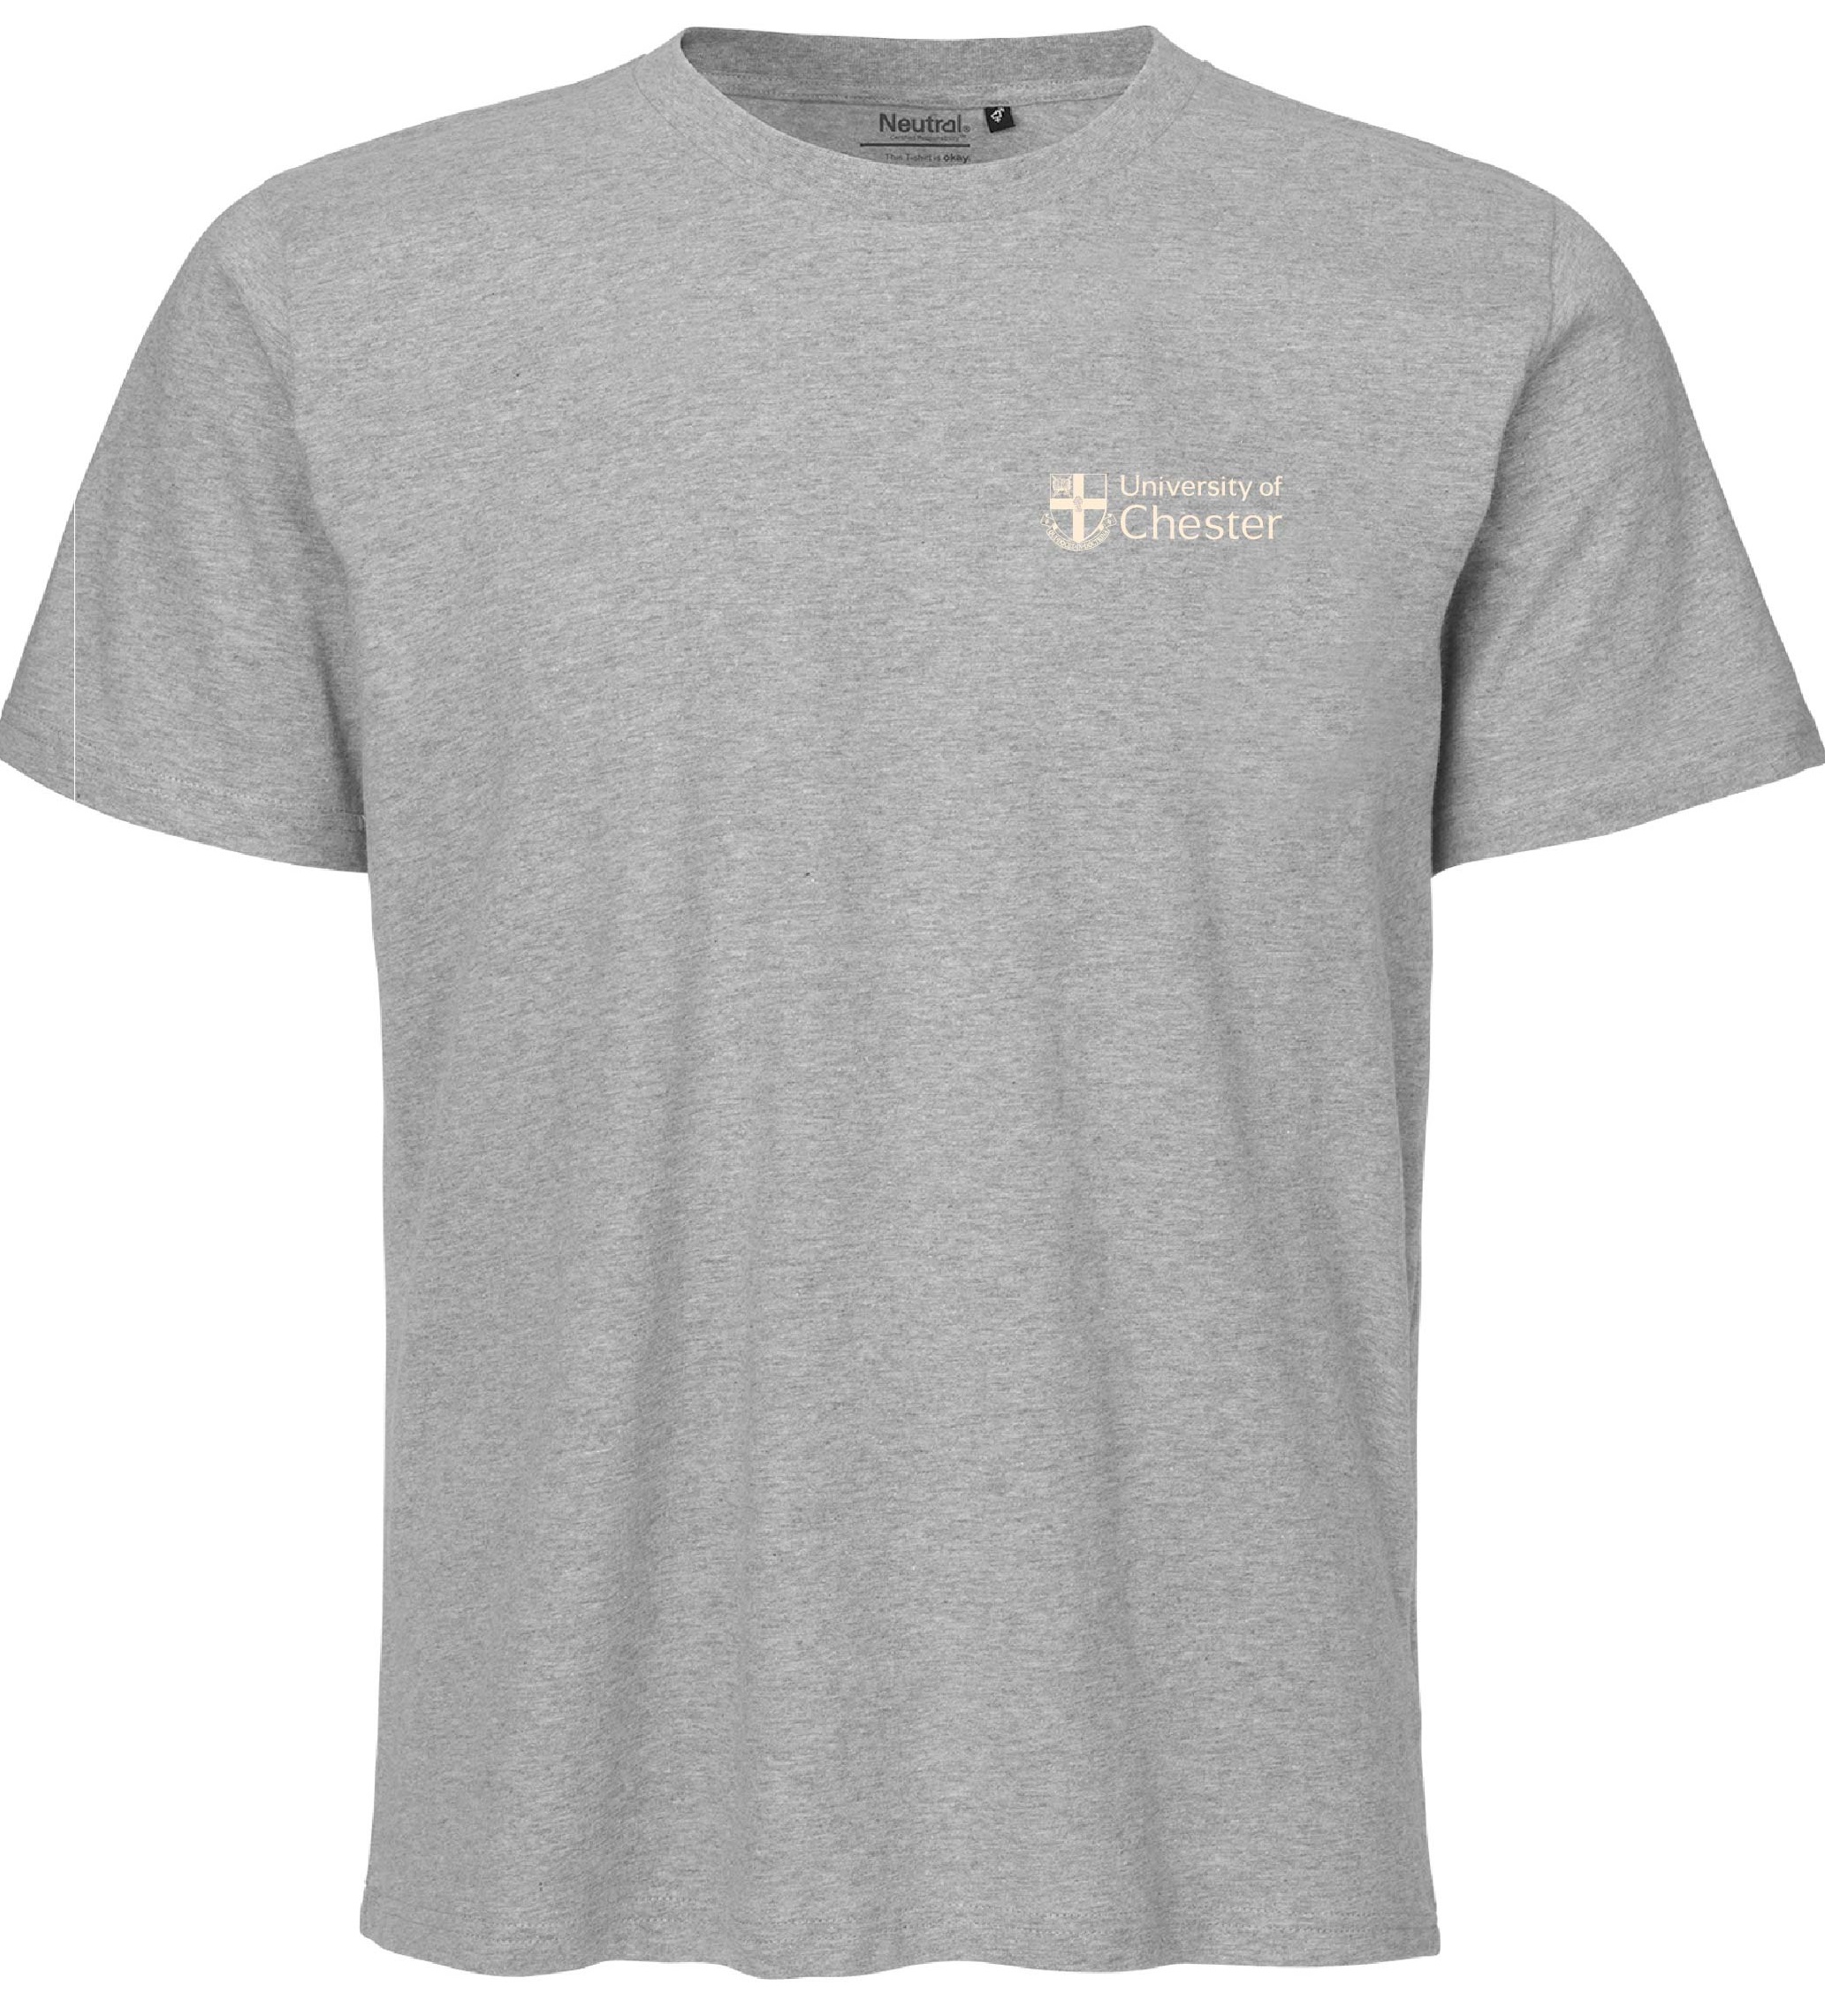 Neutral range - UoC T-Shirt - Grey - M